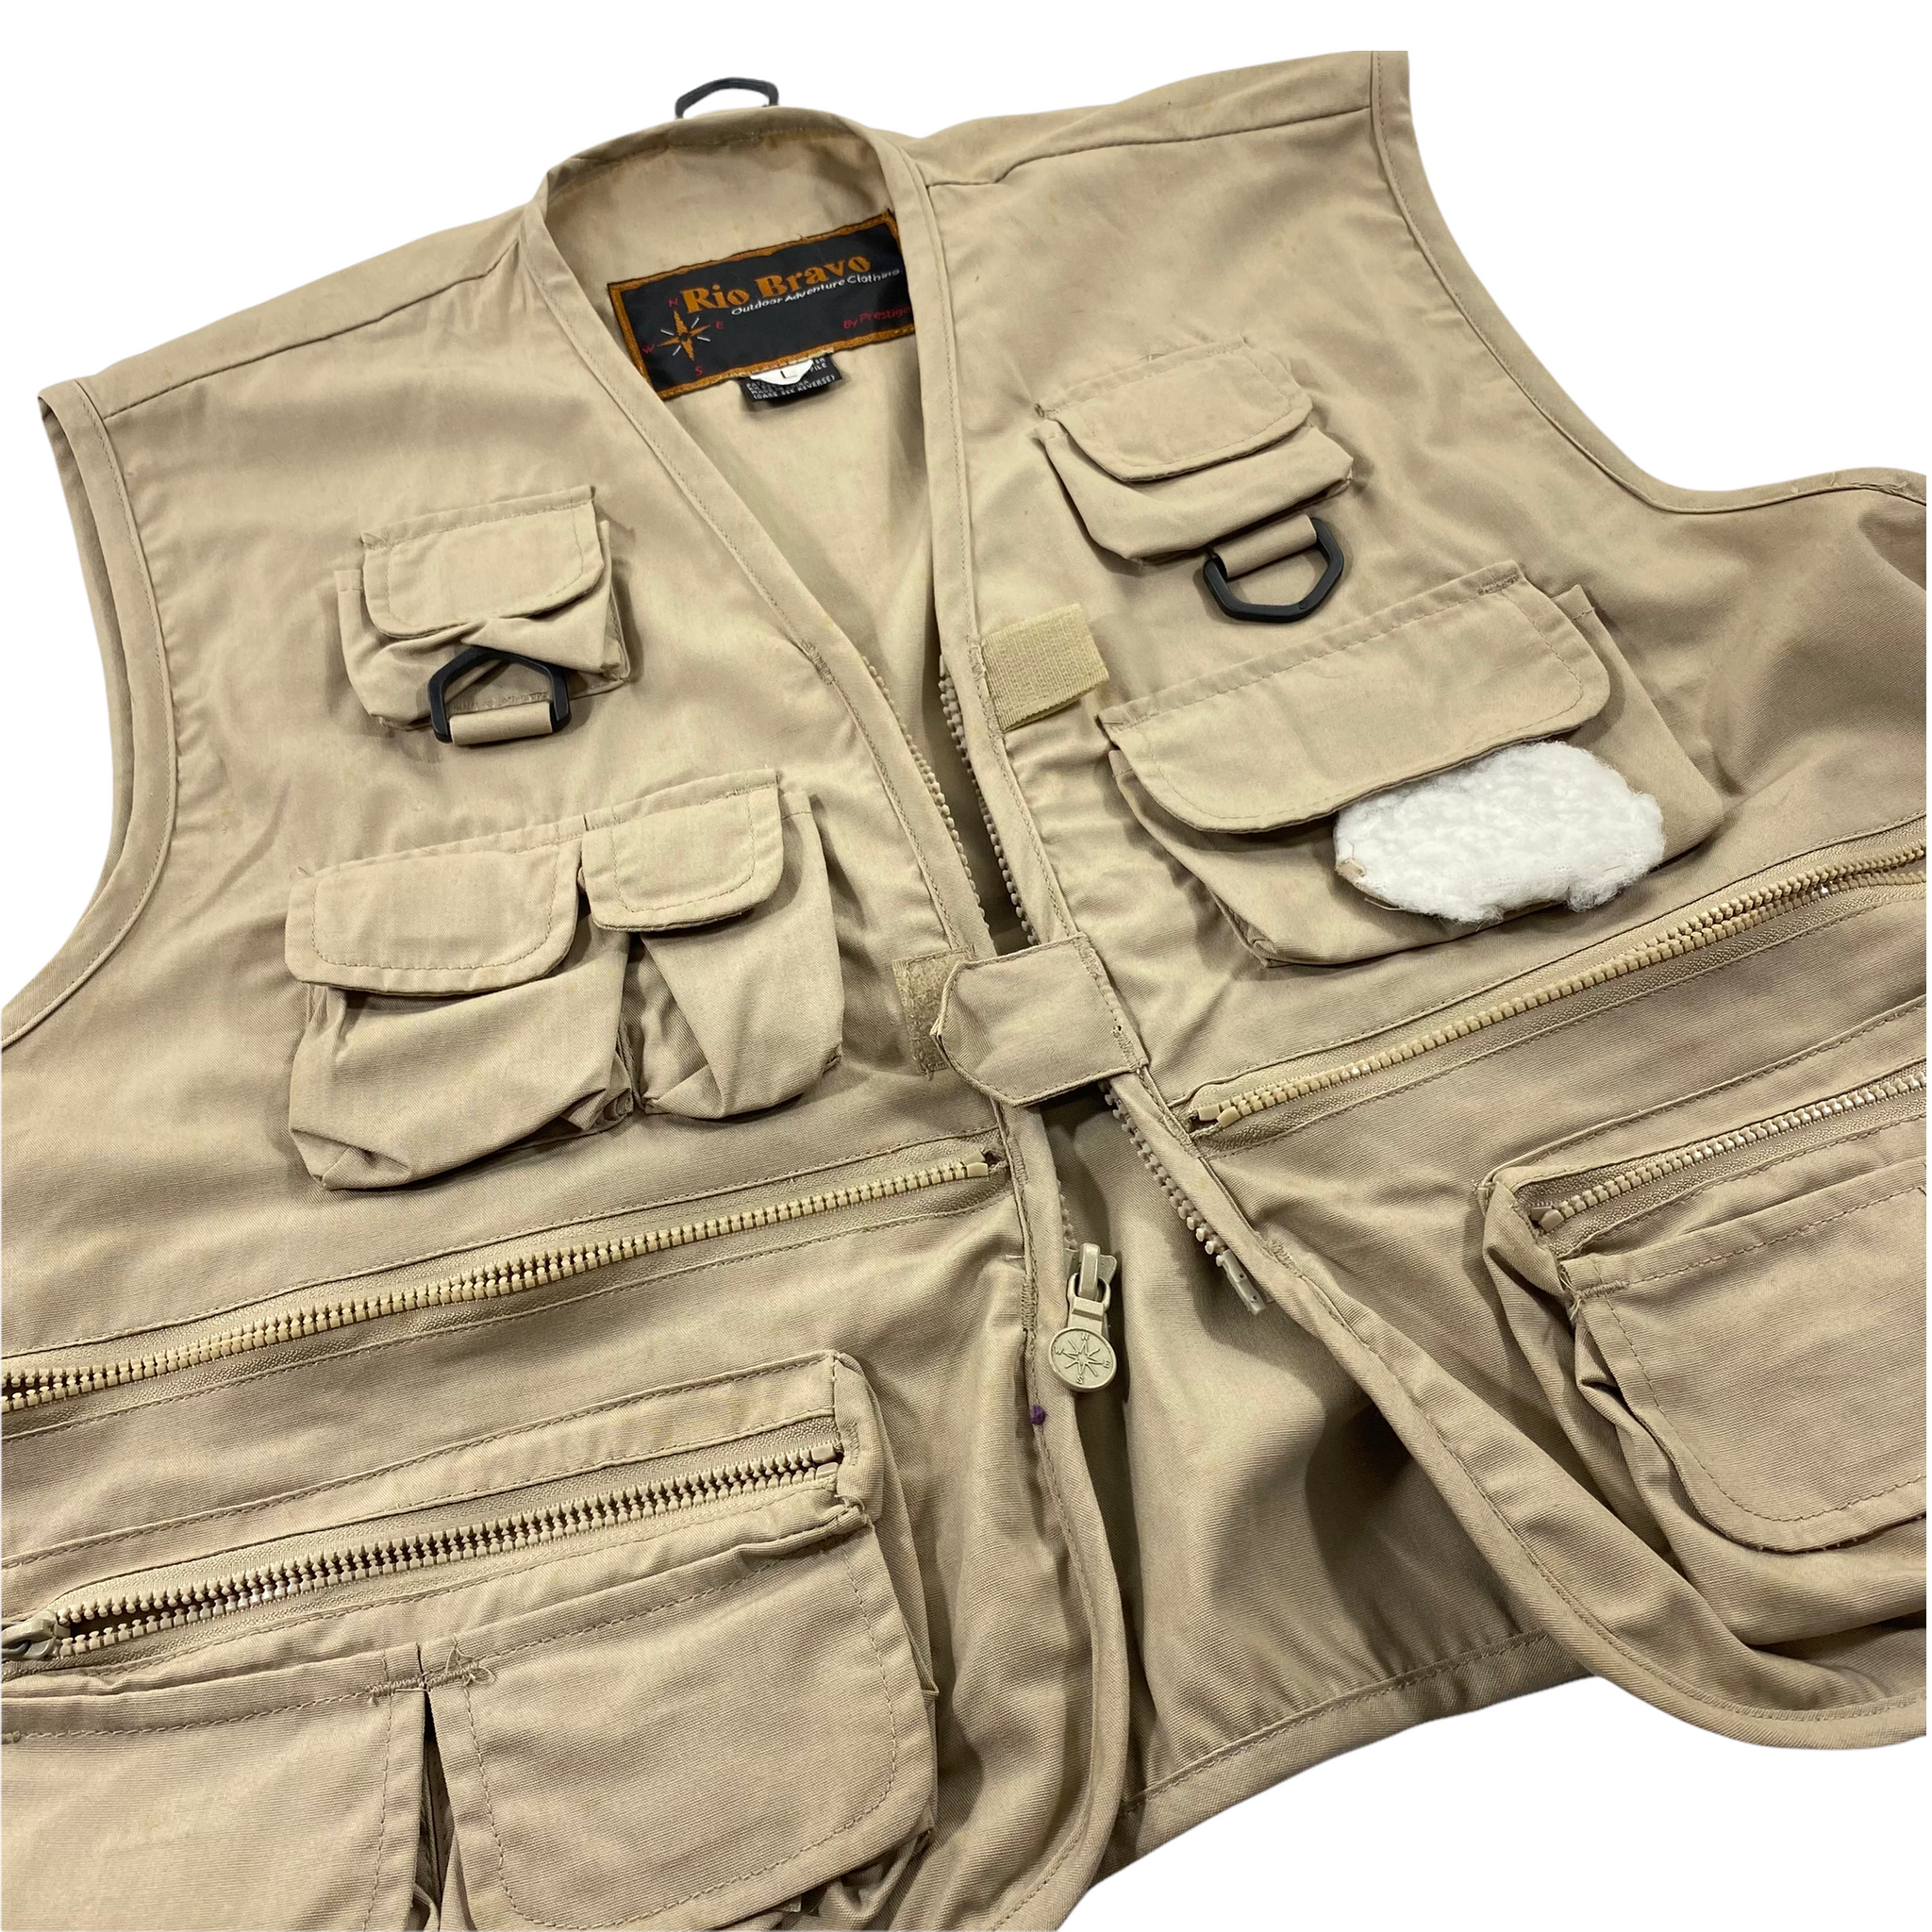 Fishing vest. medium – Vintage Sponsor